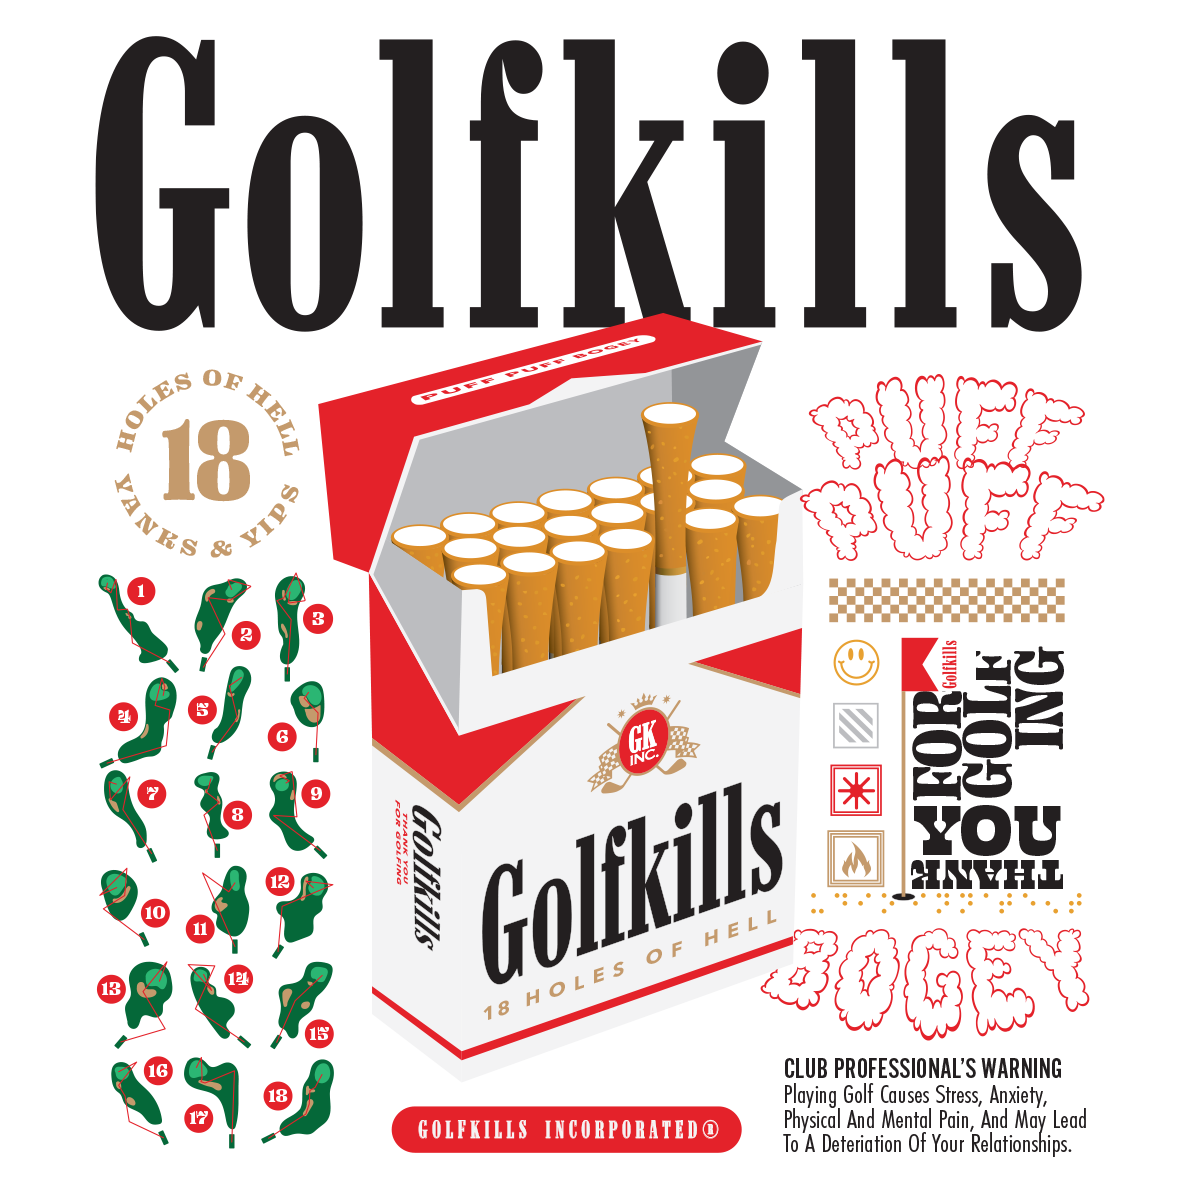 Golfkills T-Shirt